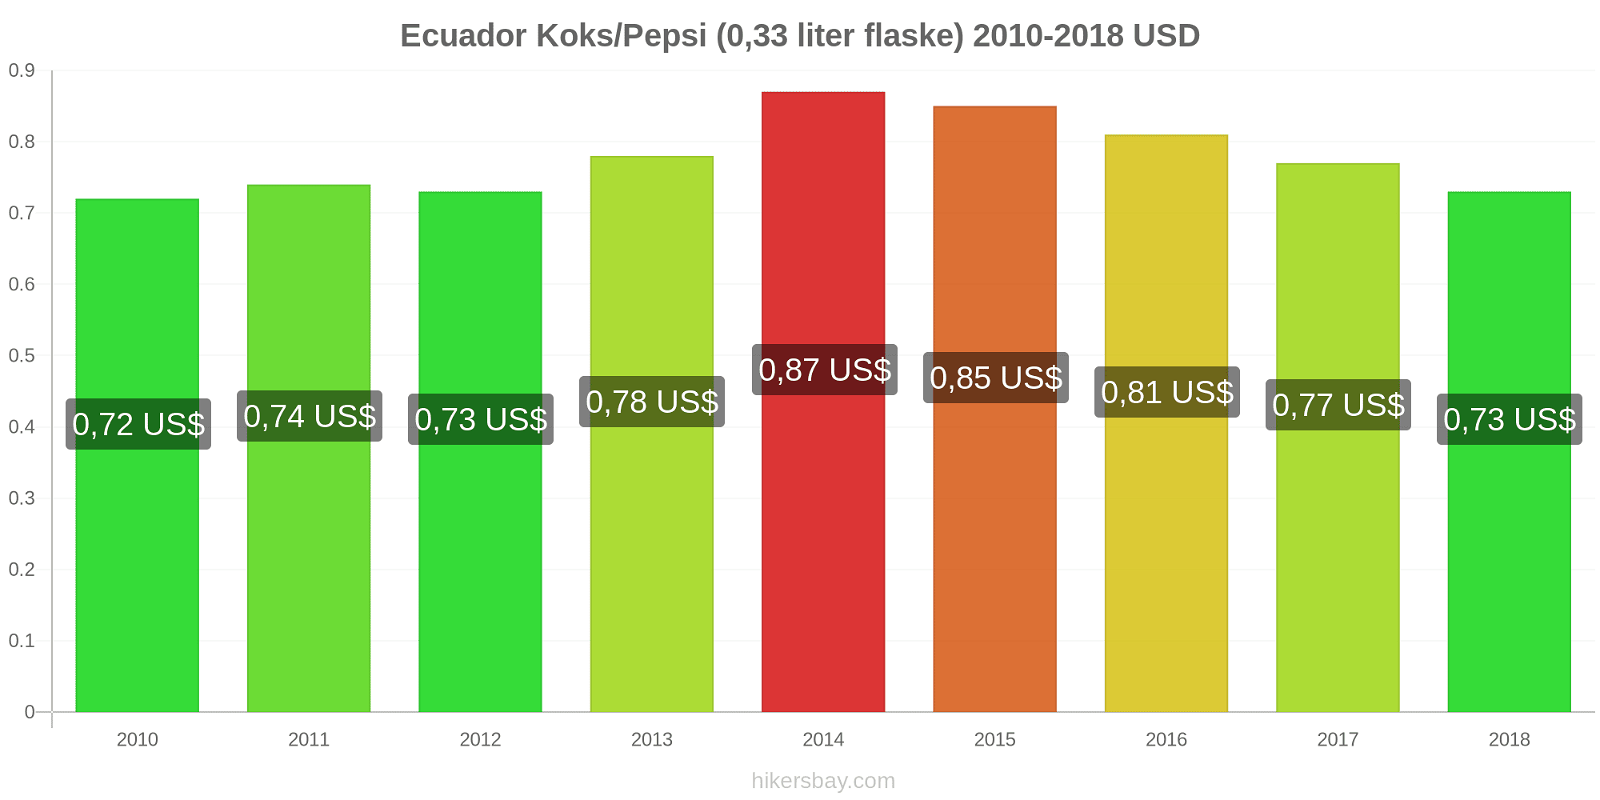 Ecuador prisændringer Coca-Cola/Pepsi (0.33 liter flaske) hikersbay.com